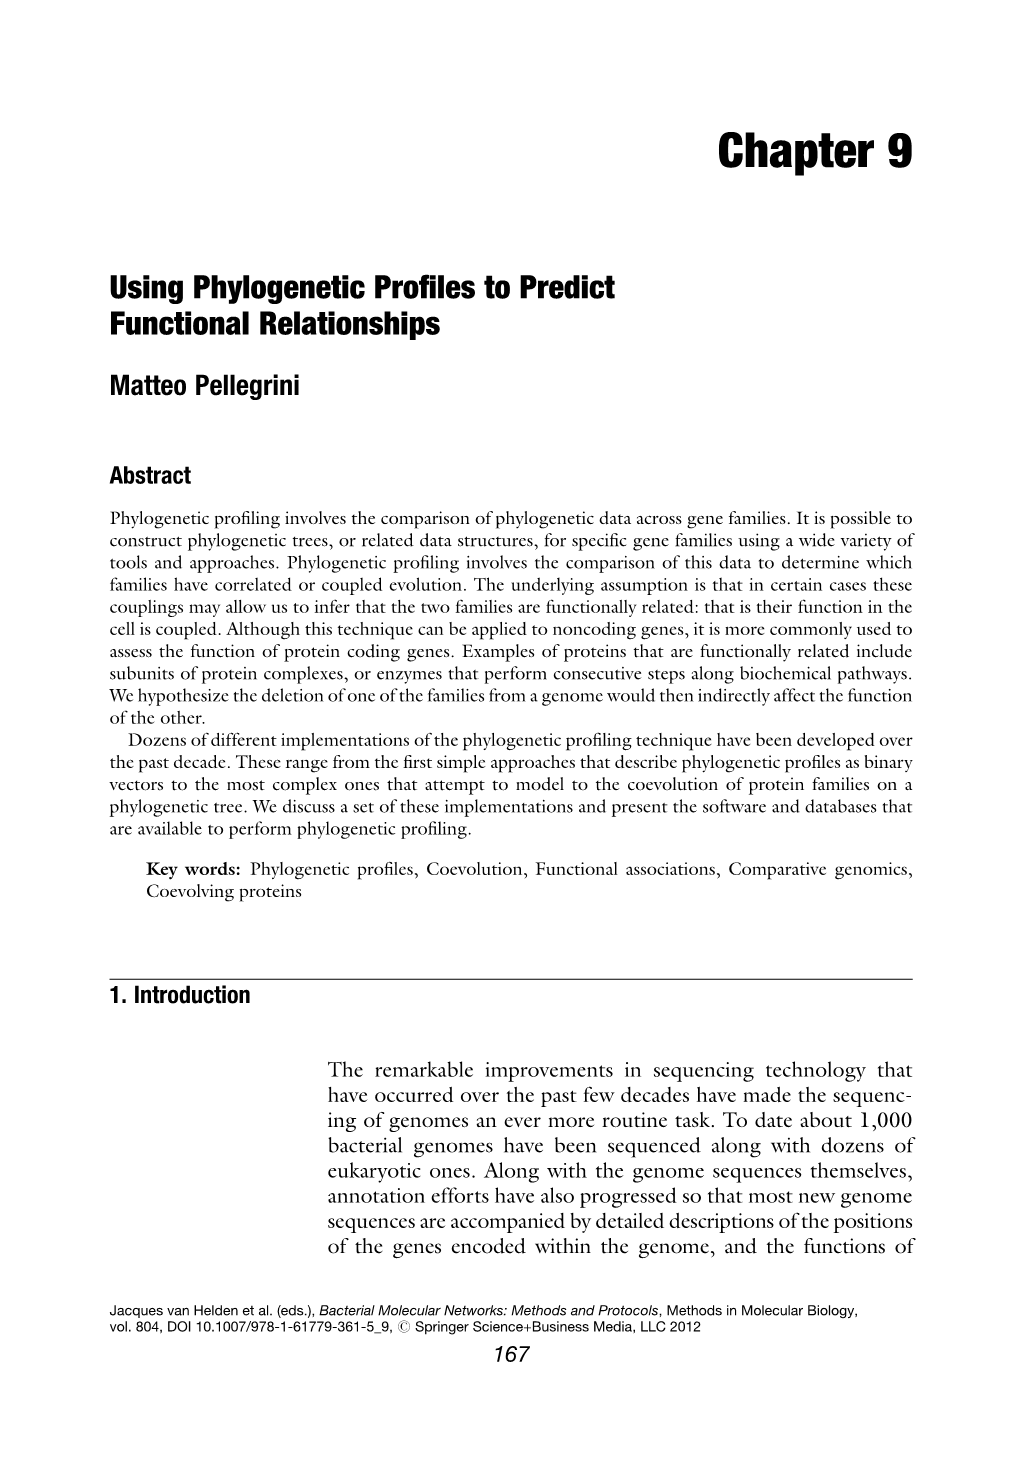 Pellegrini M. Using Phylogenetic Profiles To